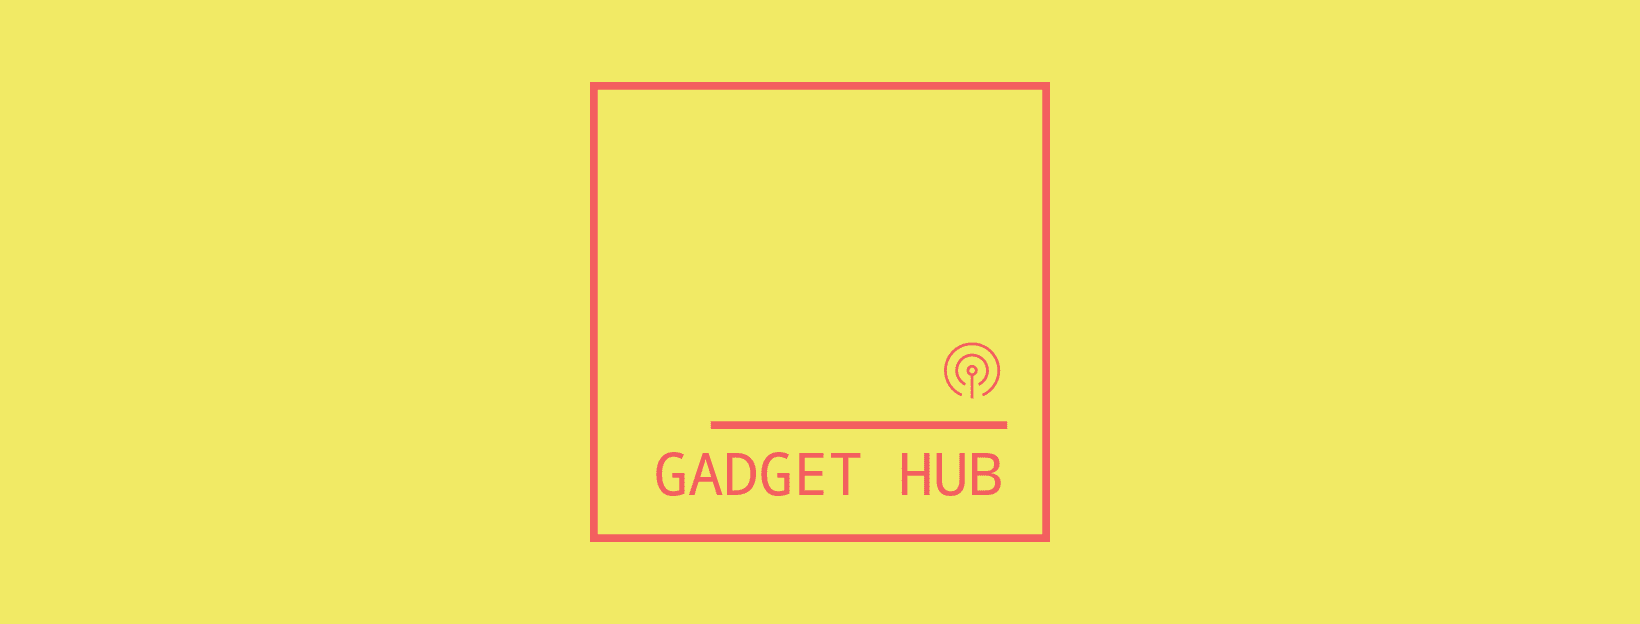 Gadget Hub